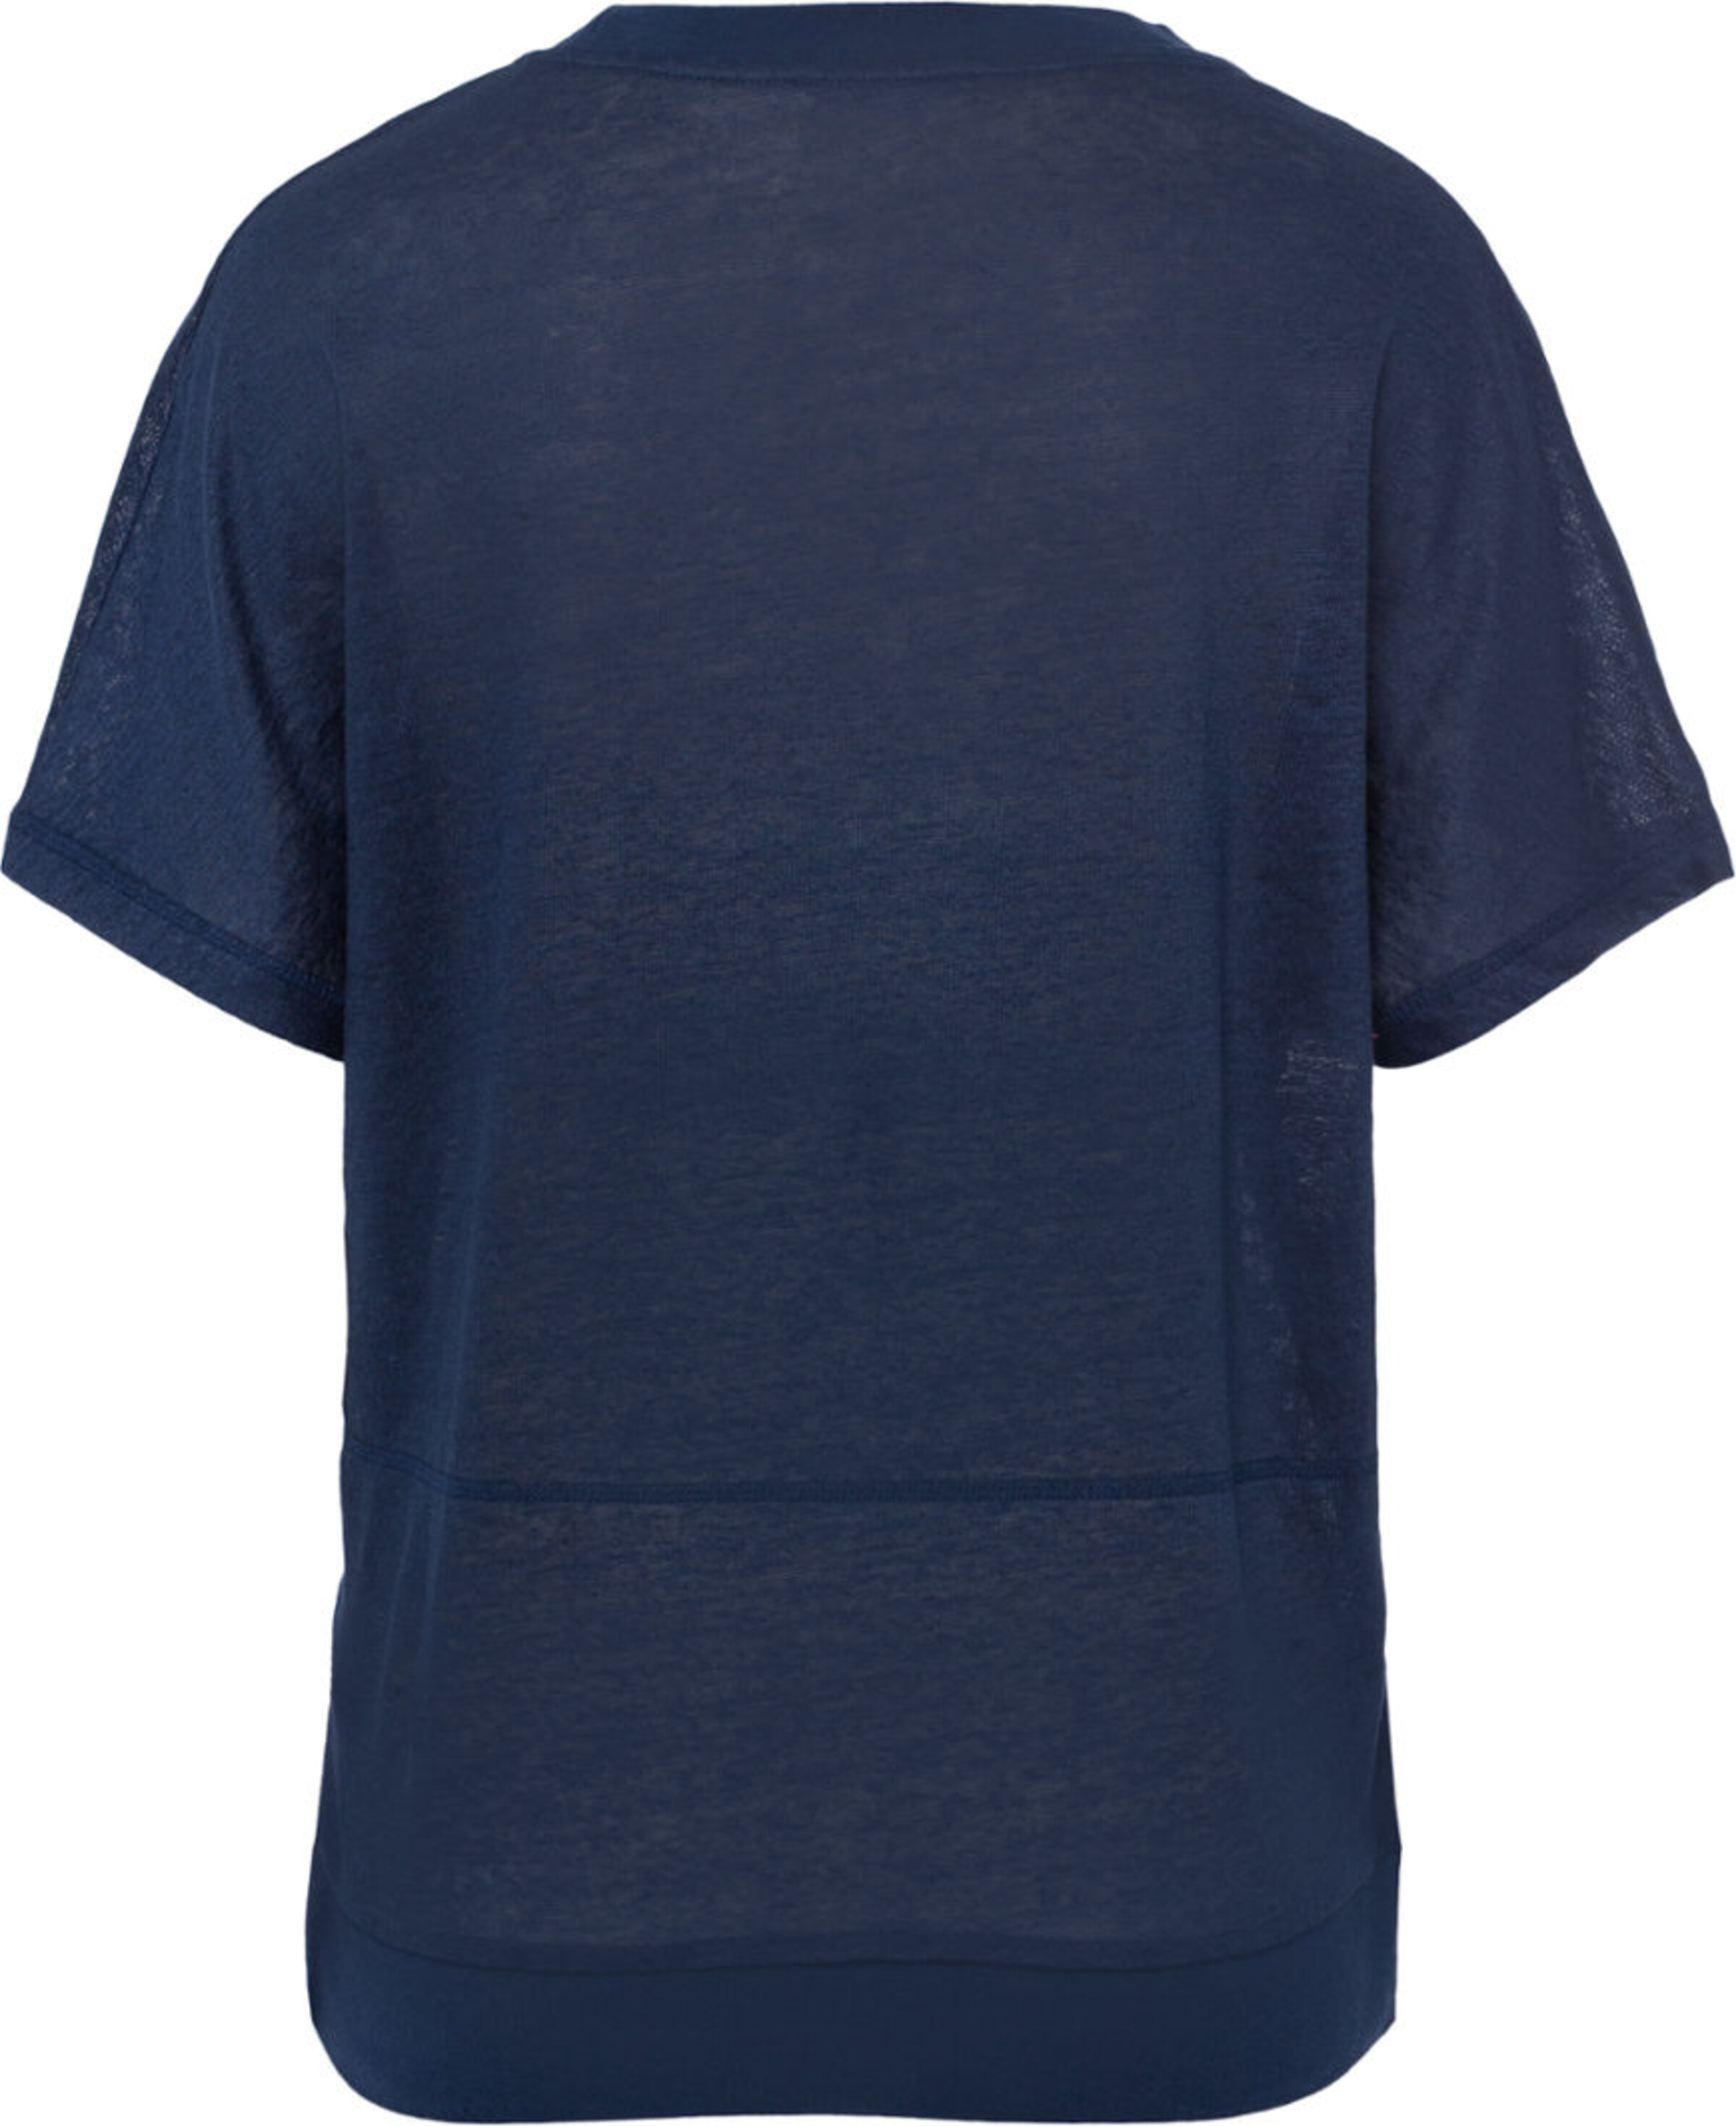 Frauen Shirts & Tops BRAX T-Shirt 'Rachel' in Indigo, Nachtblau - FY17718